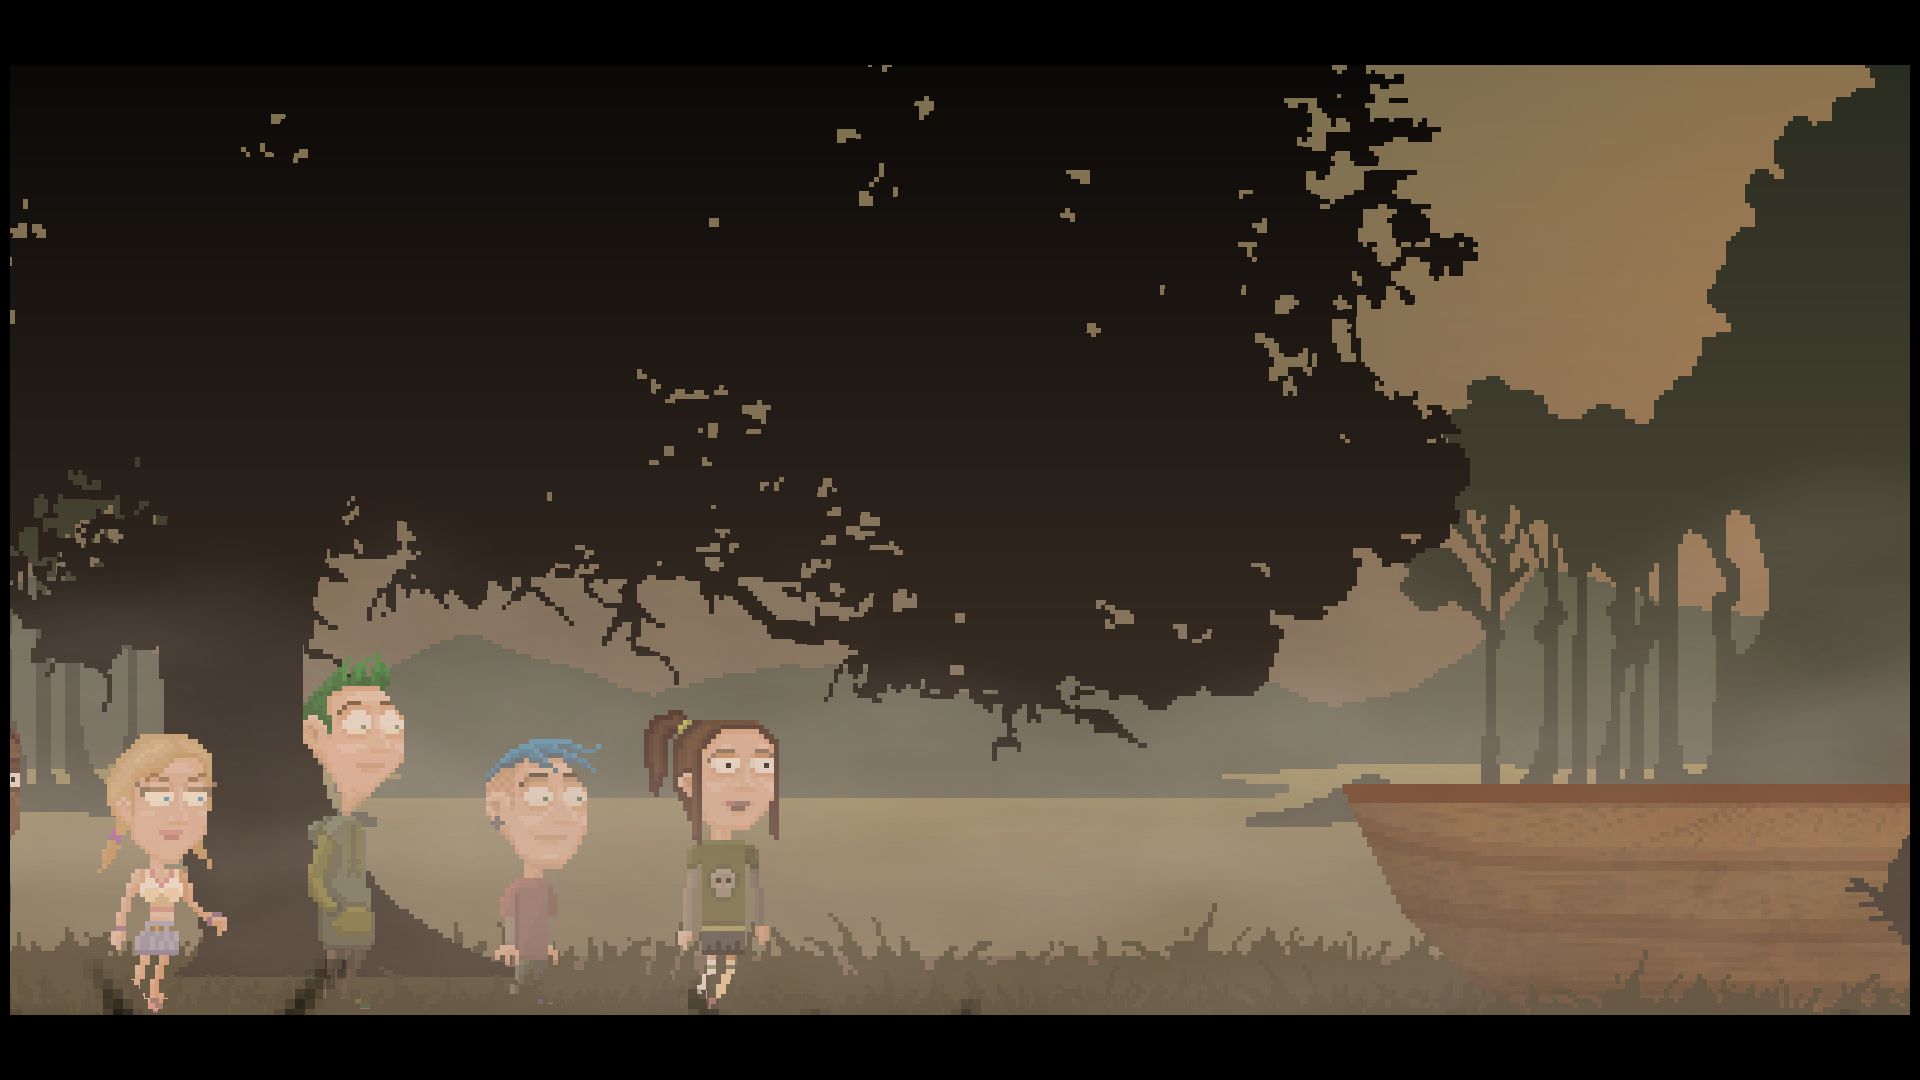 Moth Lake: A Horror Story - Android game screenshots.